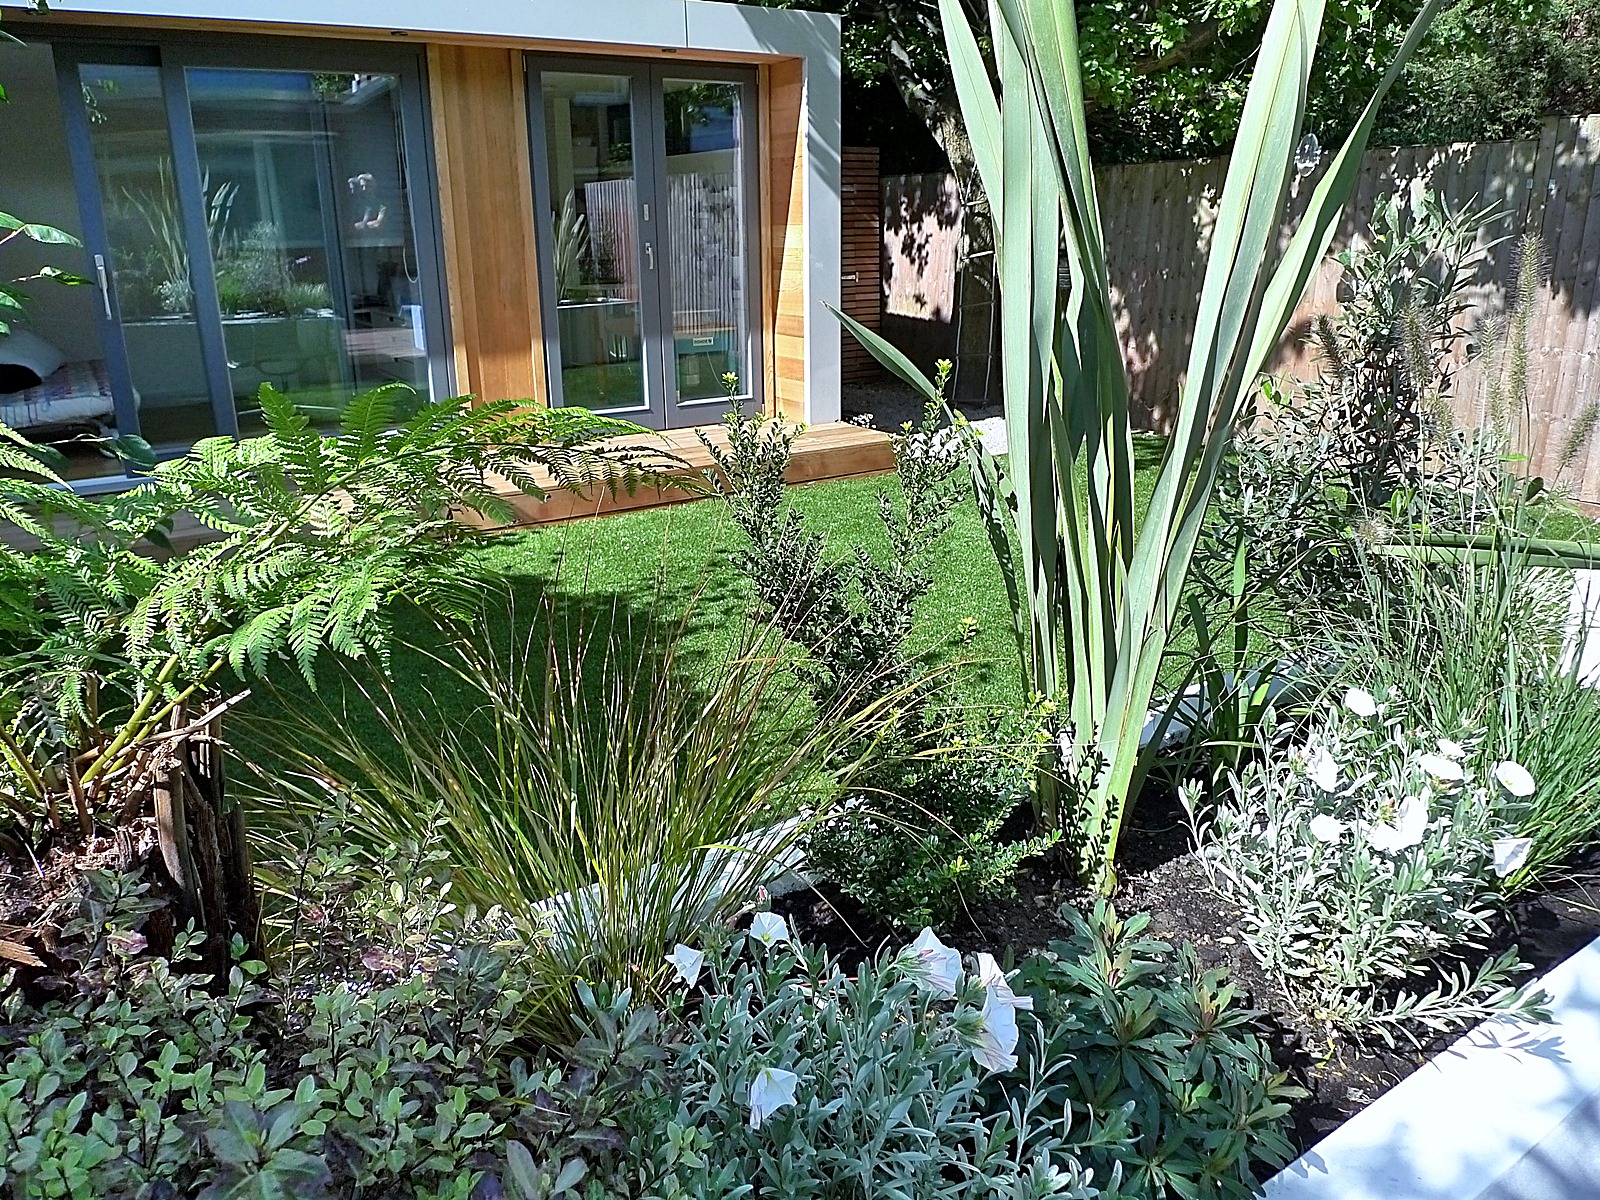 clapham and balham modern garden design decking planting artificial lawn grass hardwood privacy screen indoor outdoor space (12)